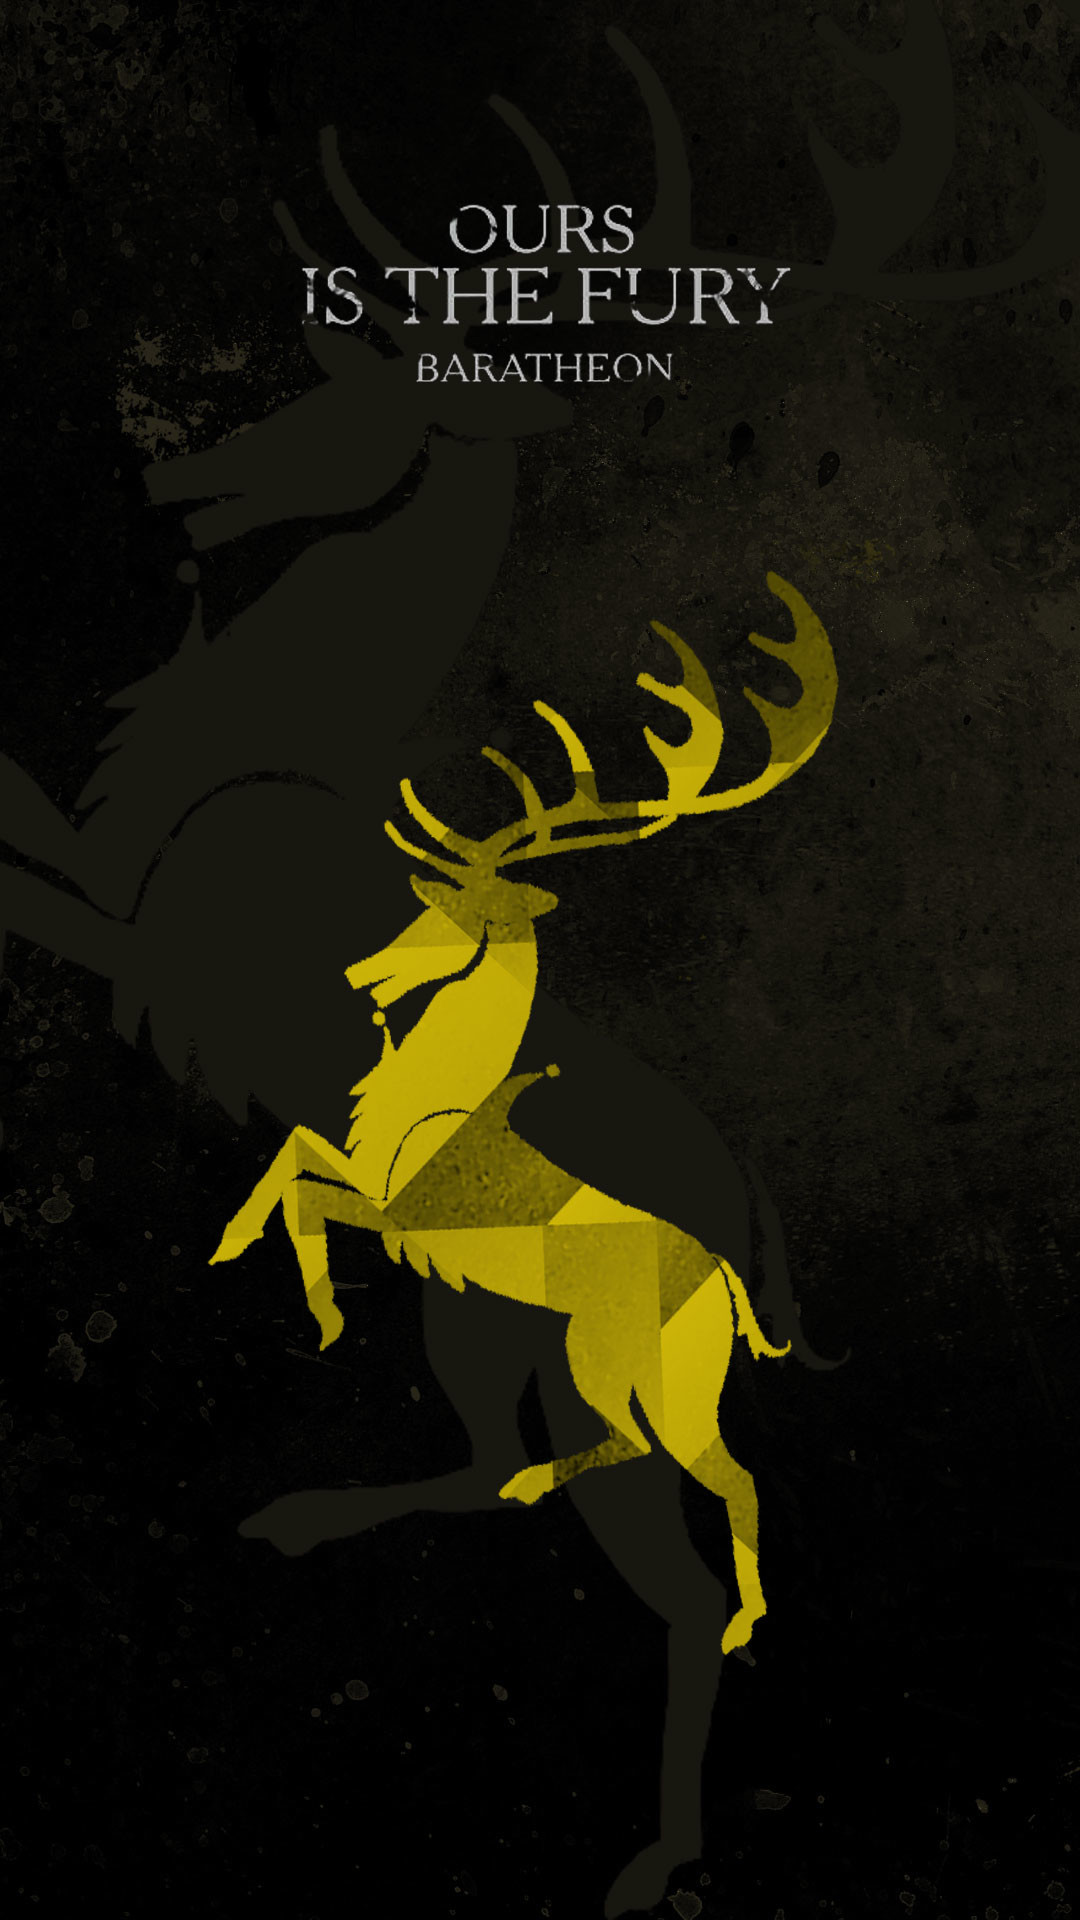 NoneNo Spoilers Baratheon mobile wallpaper. Hope you guys like it